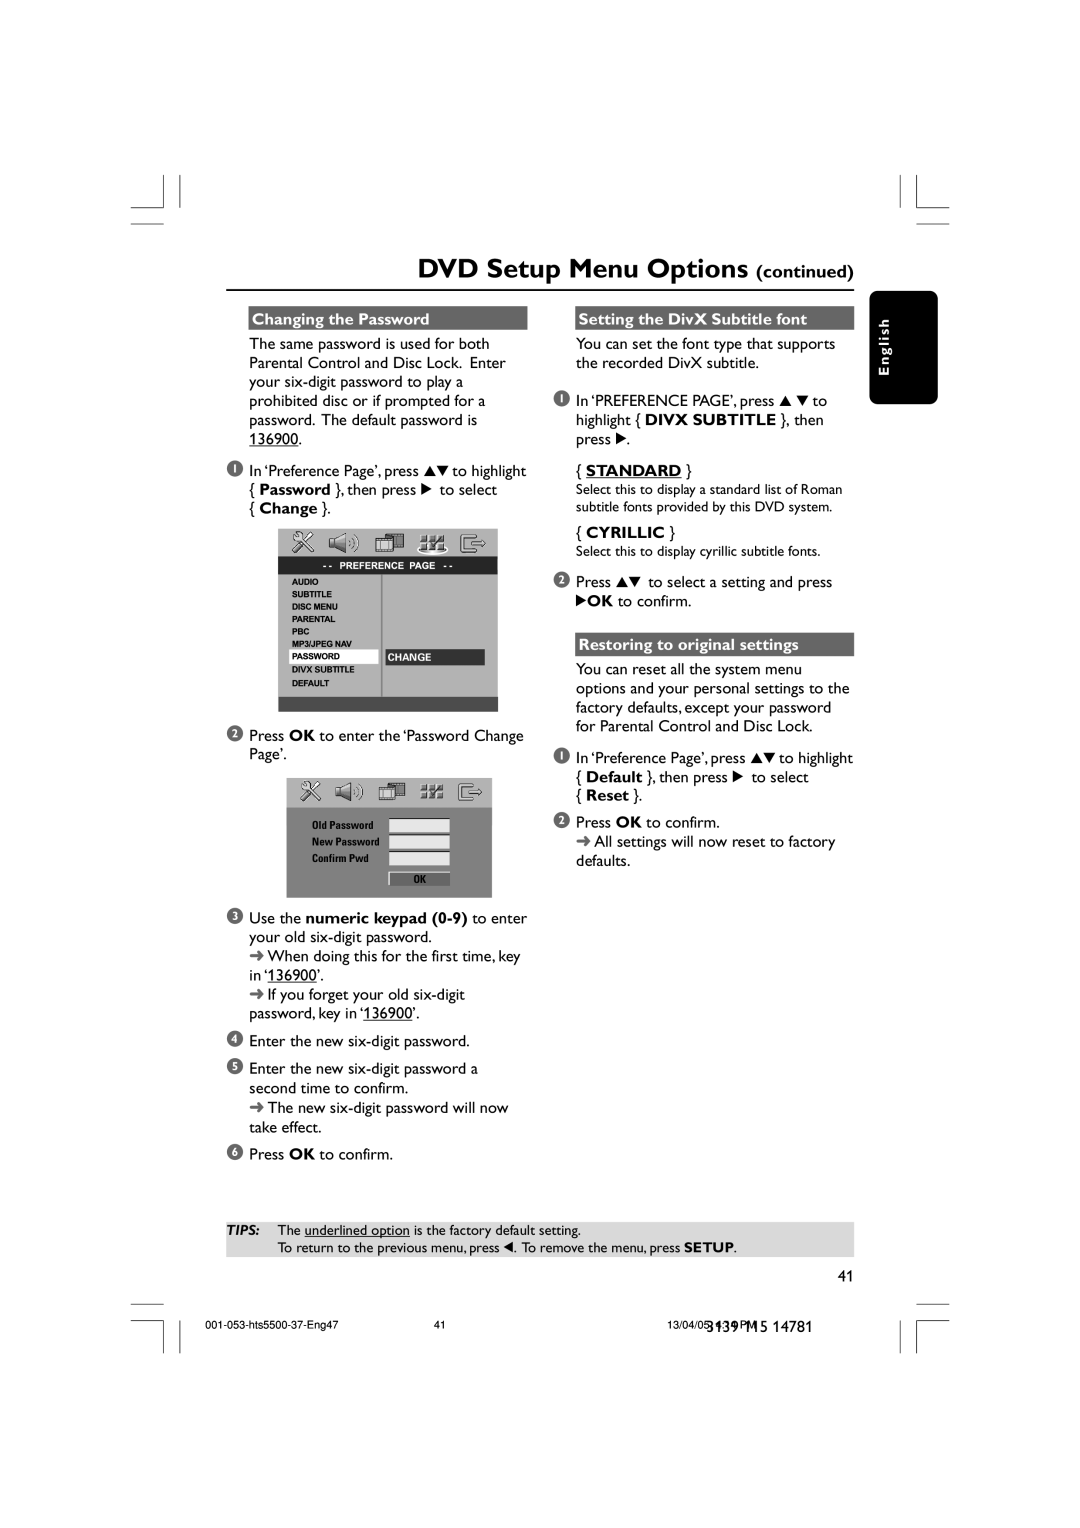 Philips HTS5500C/37B DVD Setup Menu Options continued, Changing the Password, Setting the DivX Subtitle font, Change 